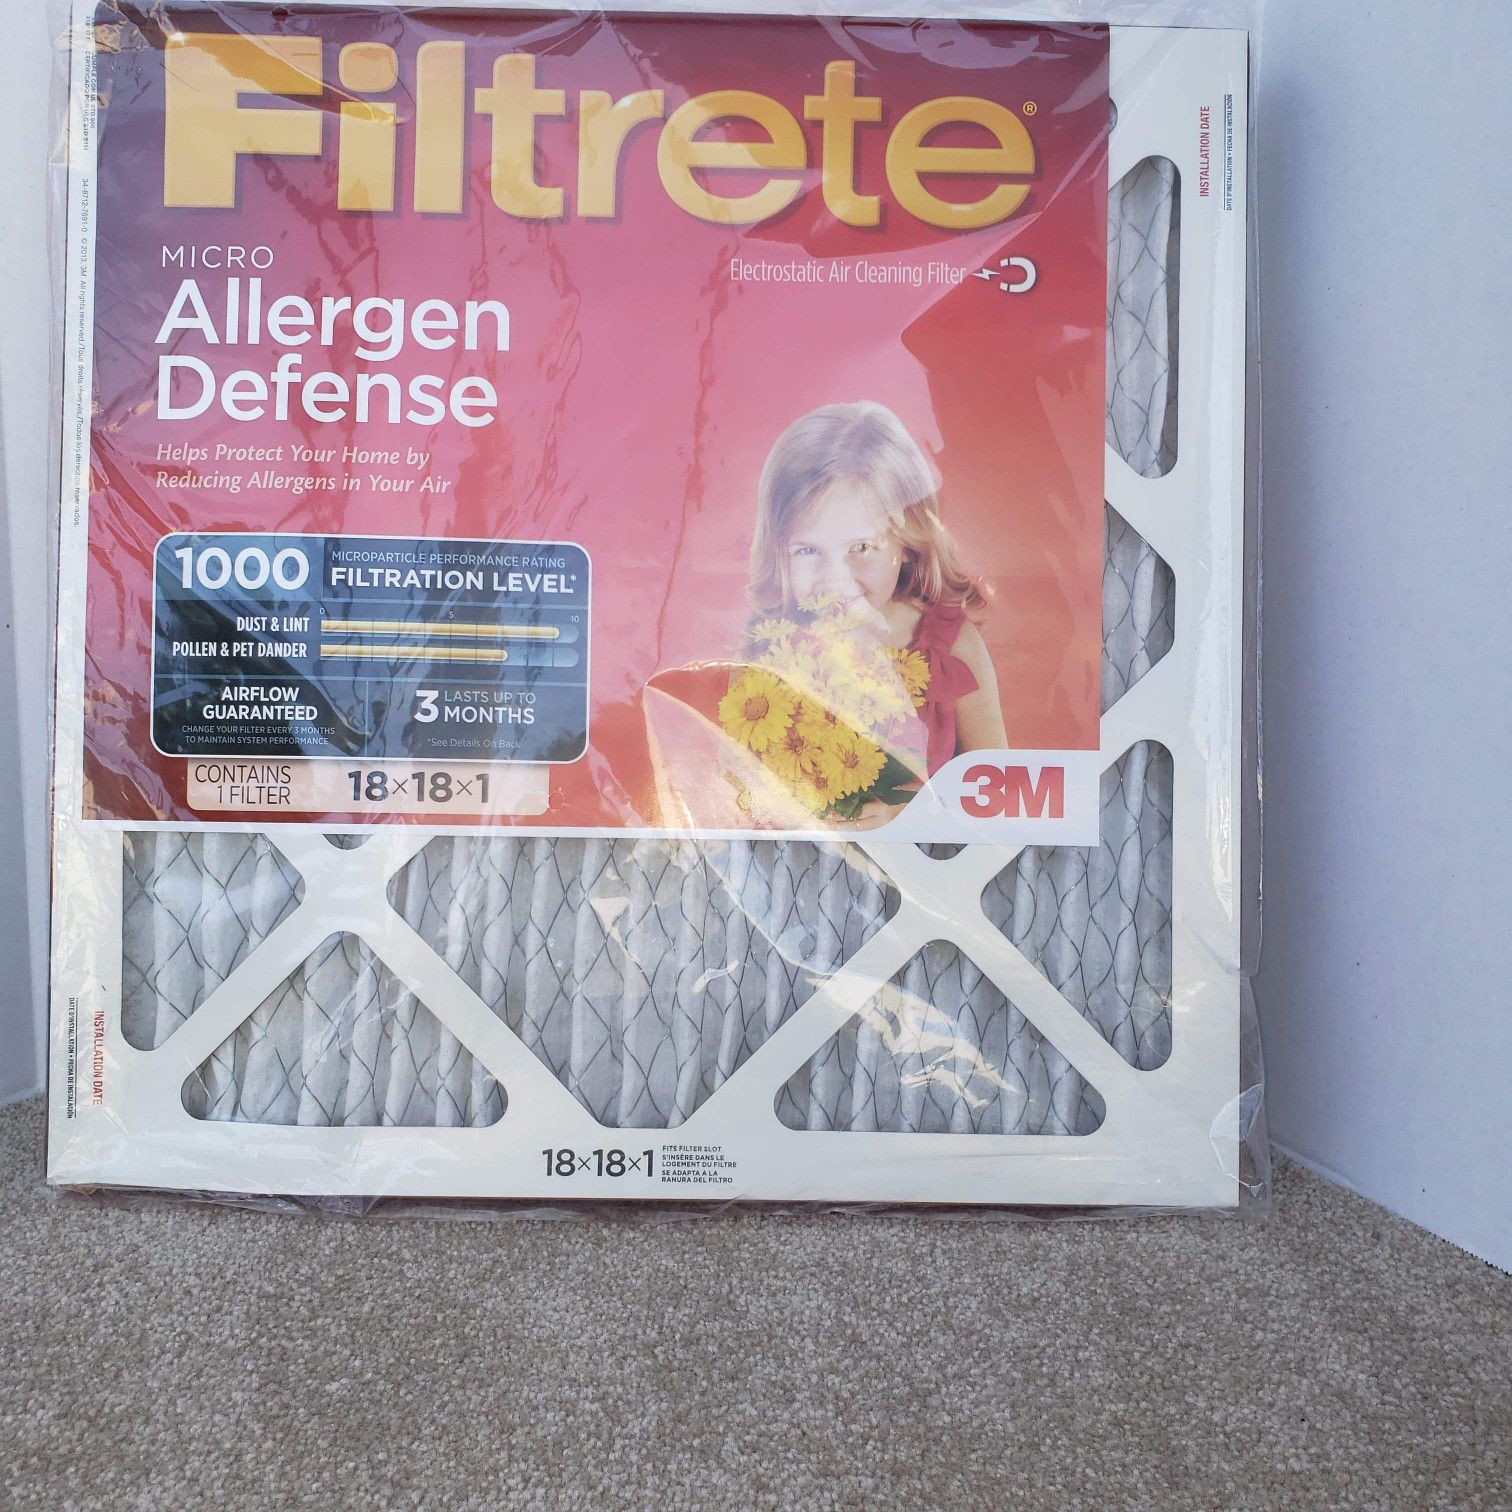 Filtrete Micro Allergen Defense Air Cleaning Filter